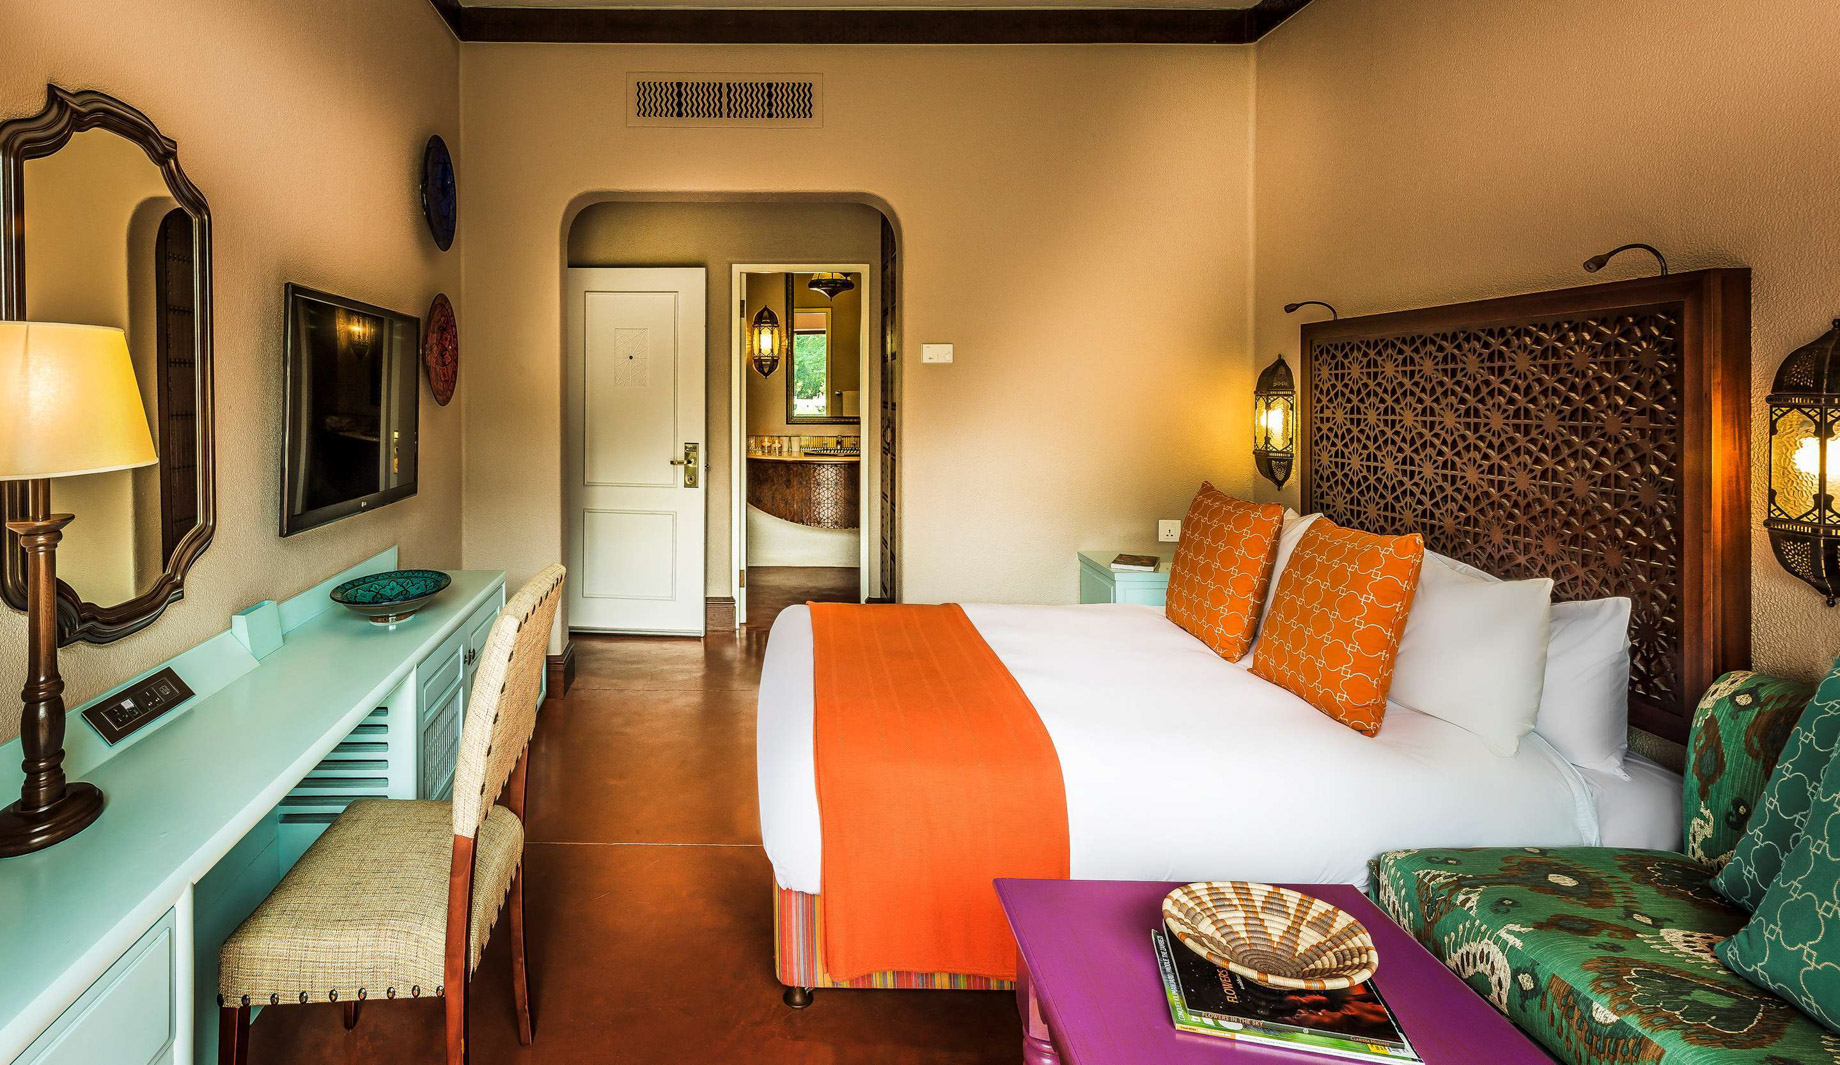 Avani Victoria Falls Resort – Livingstone, Zambia – Standard Room